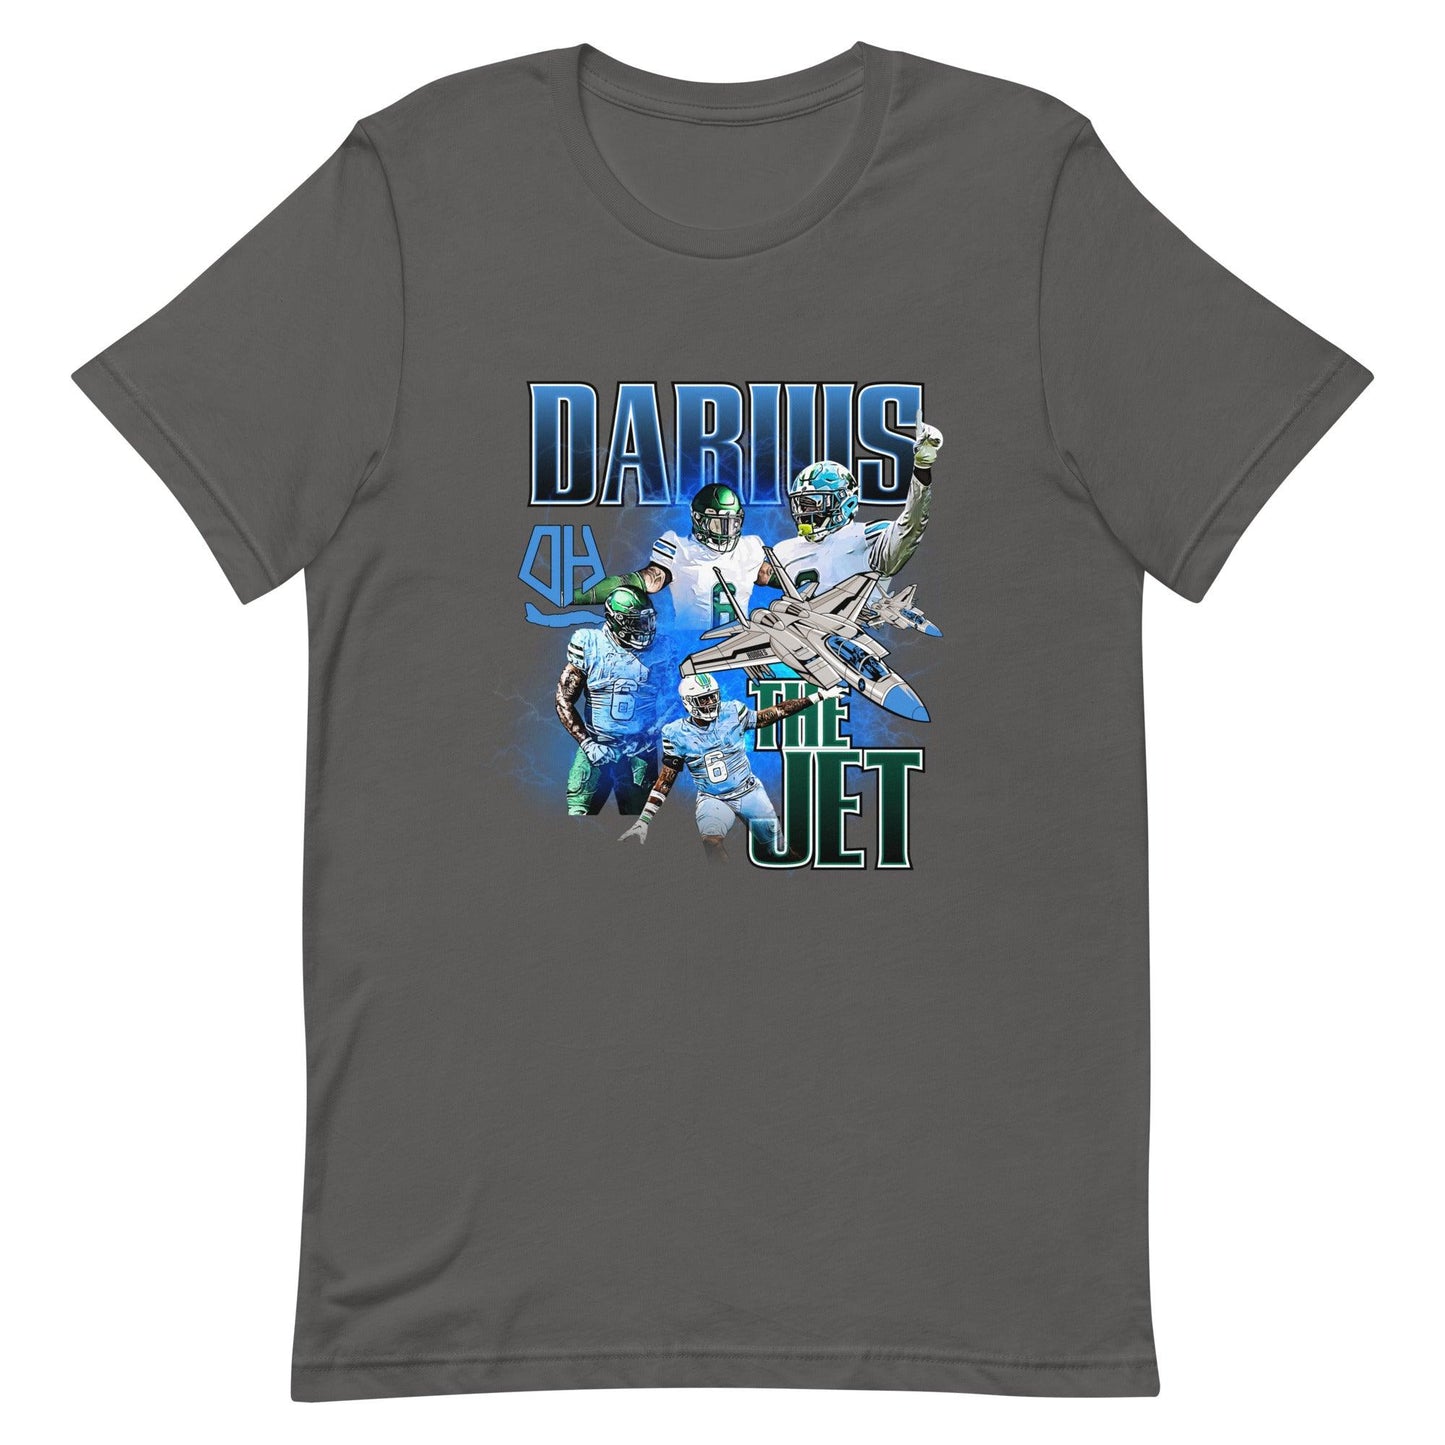 Darius Hodges "Gameday" t-shirt - Fan Arch